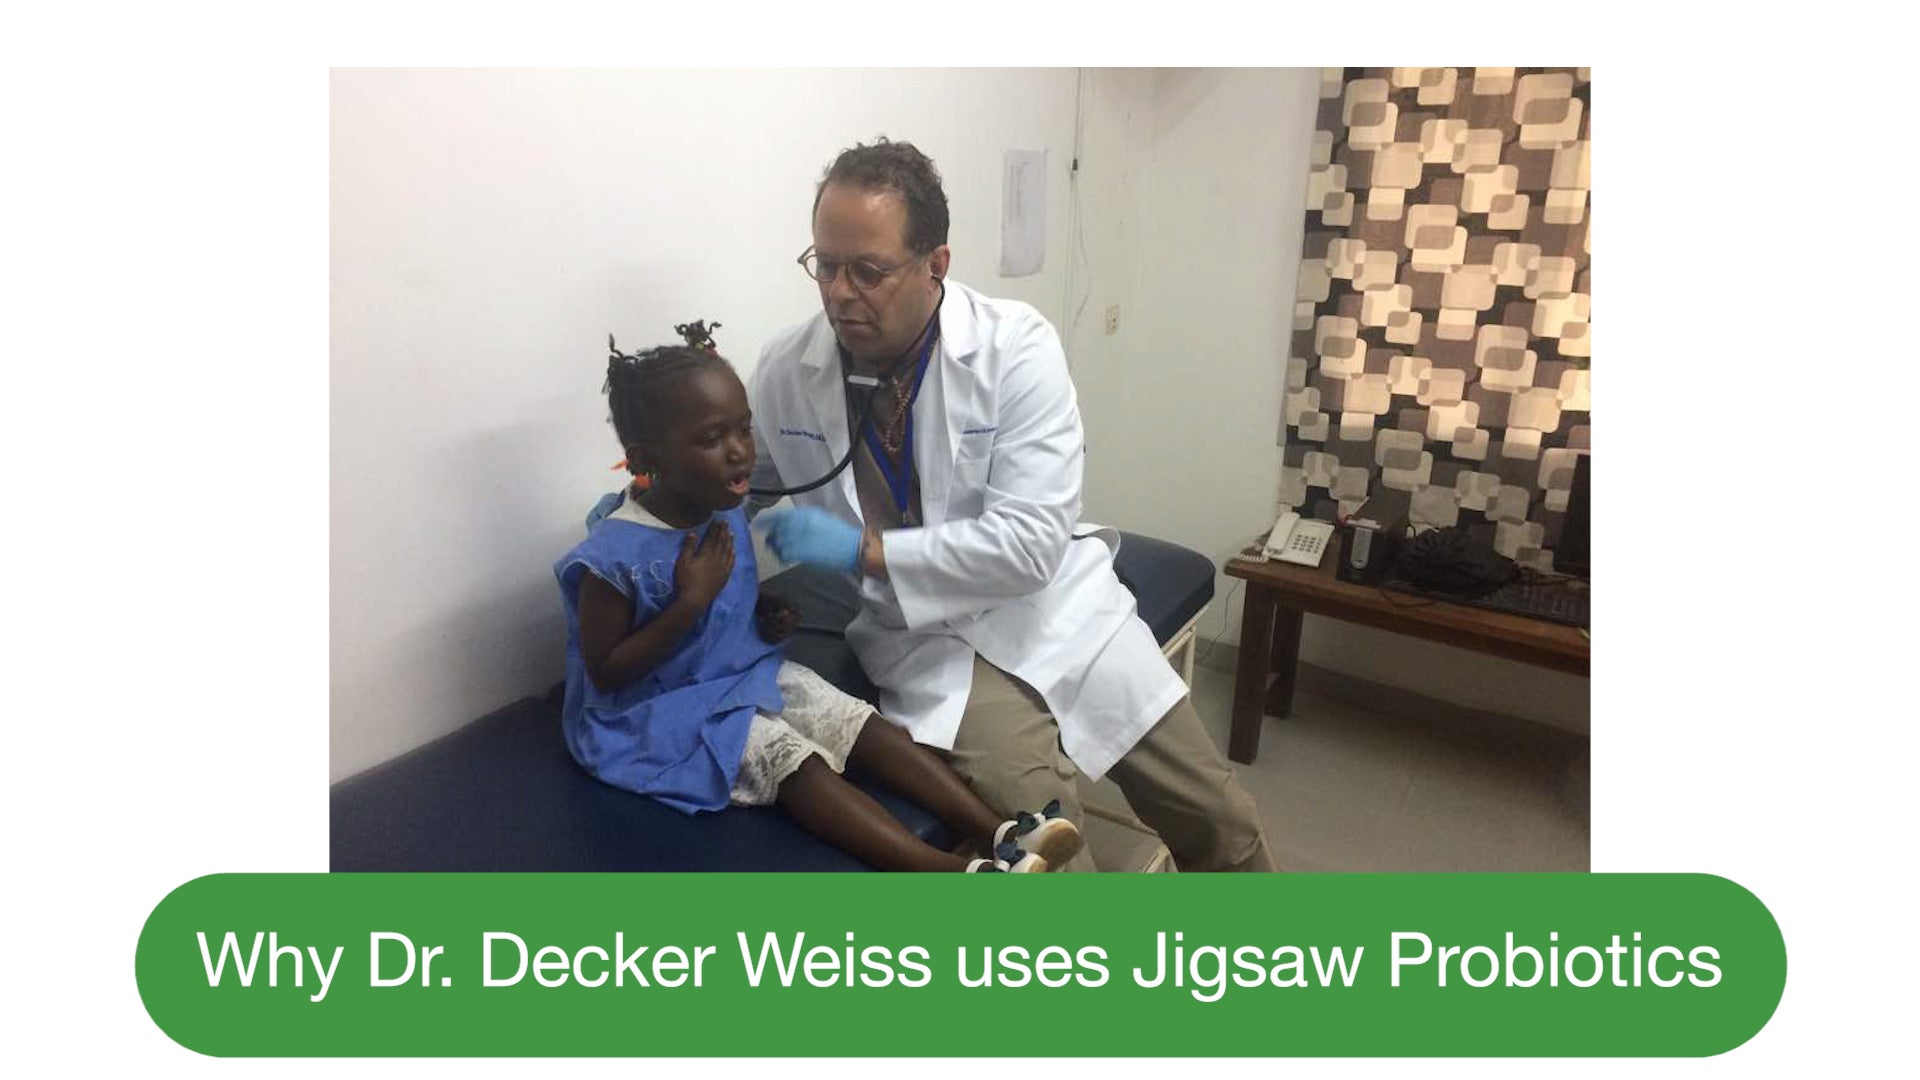 Why Dr. Decker Weiss uses Jigsaw Probiotics